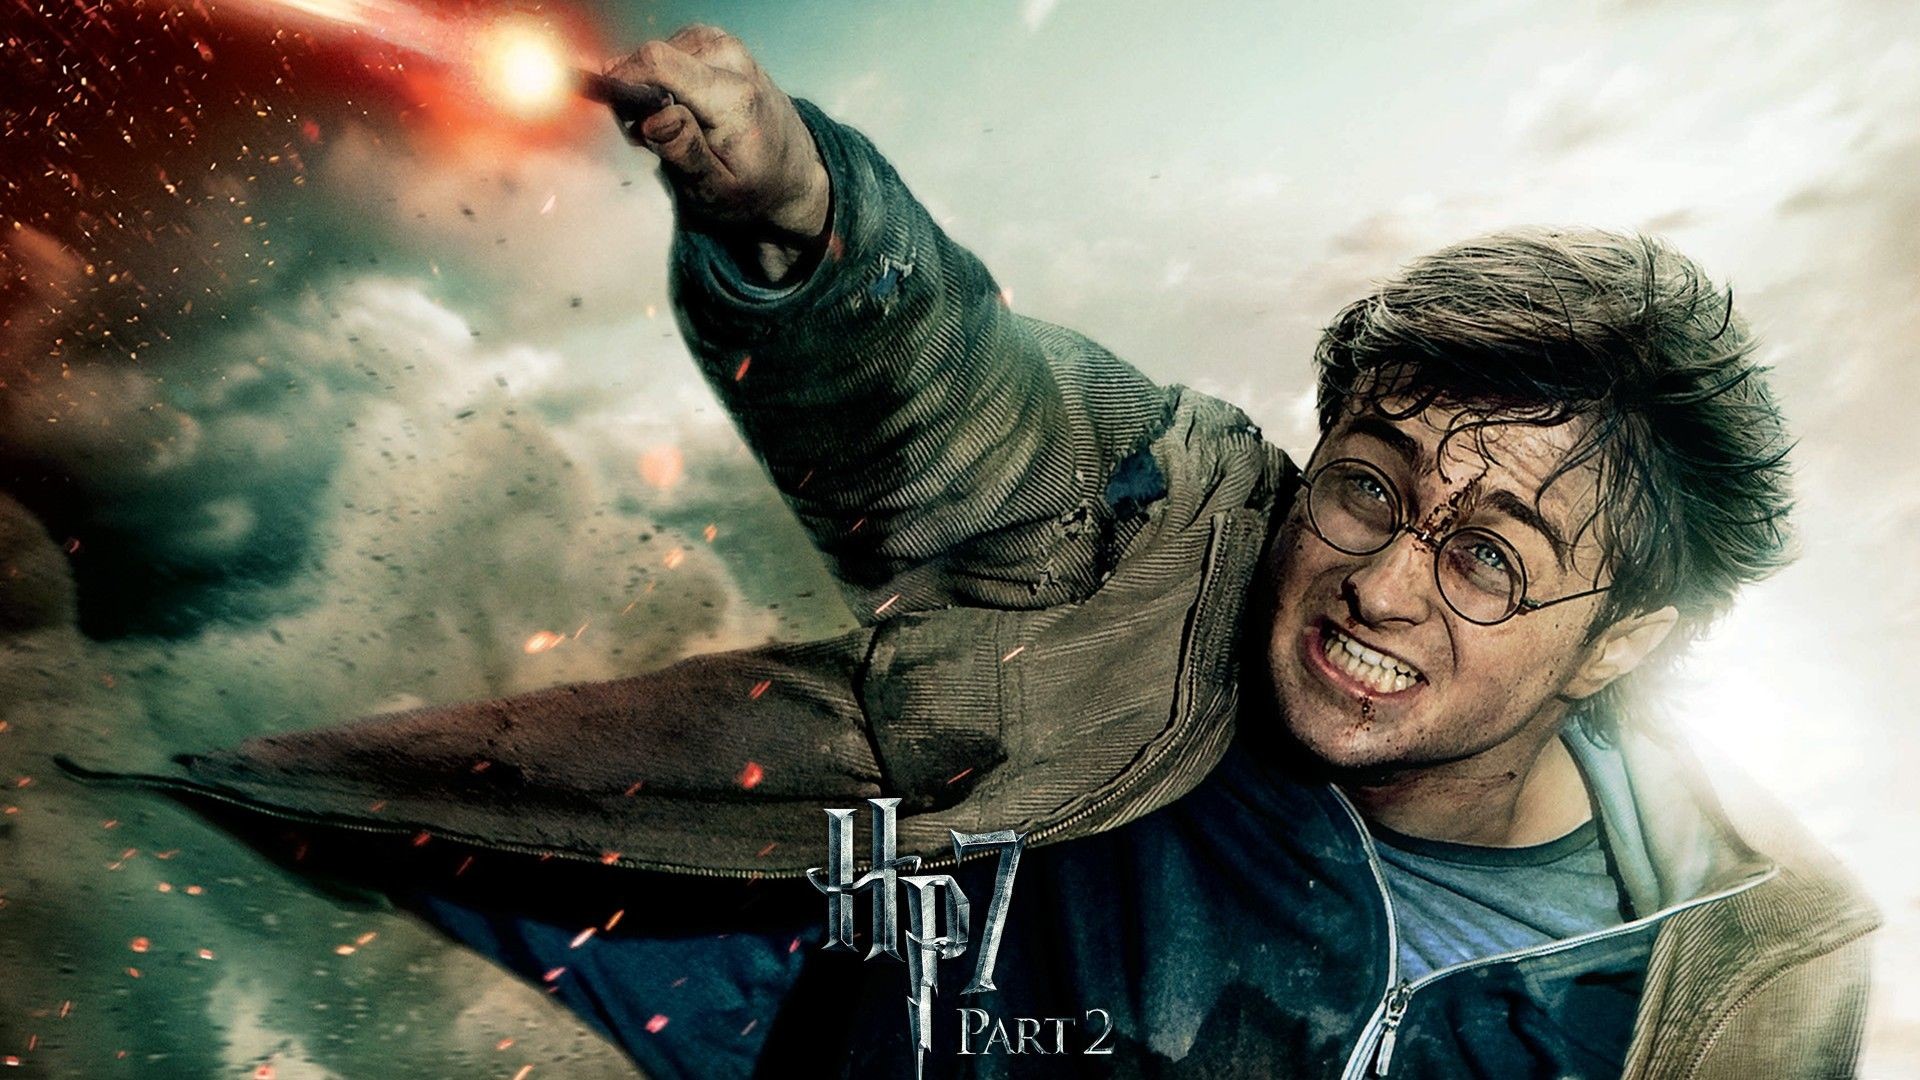 1920x1080 Harry Potter 1080p Wallpaper, Picture, Image